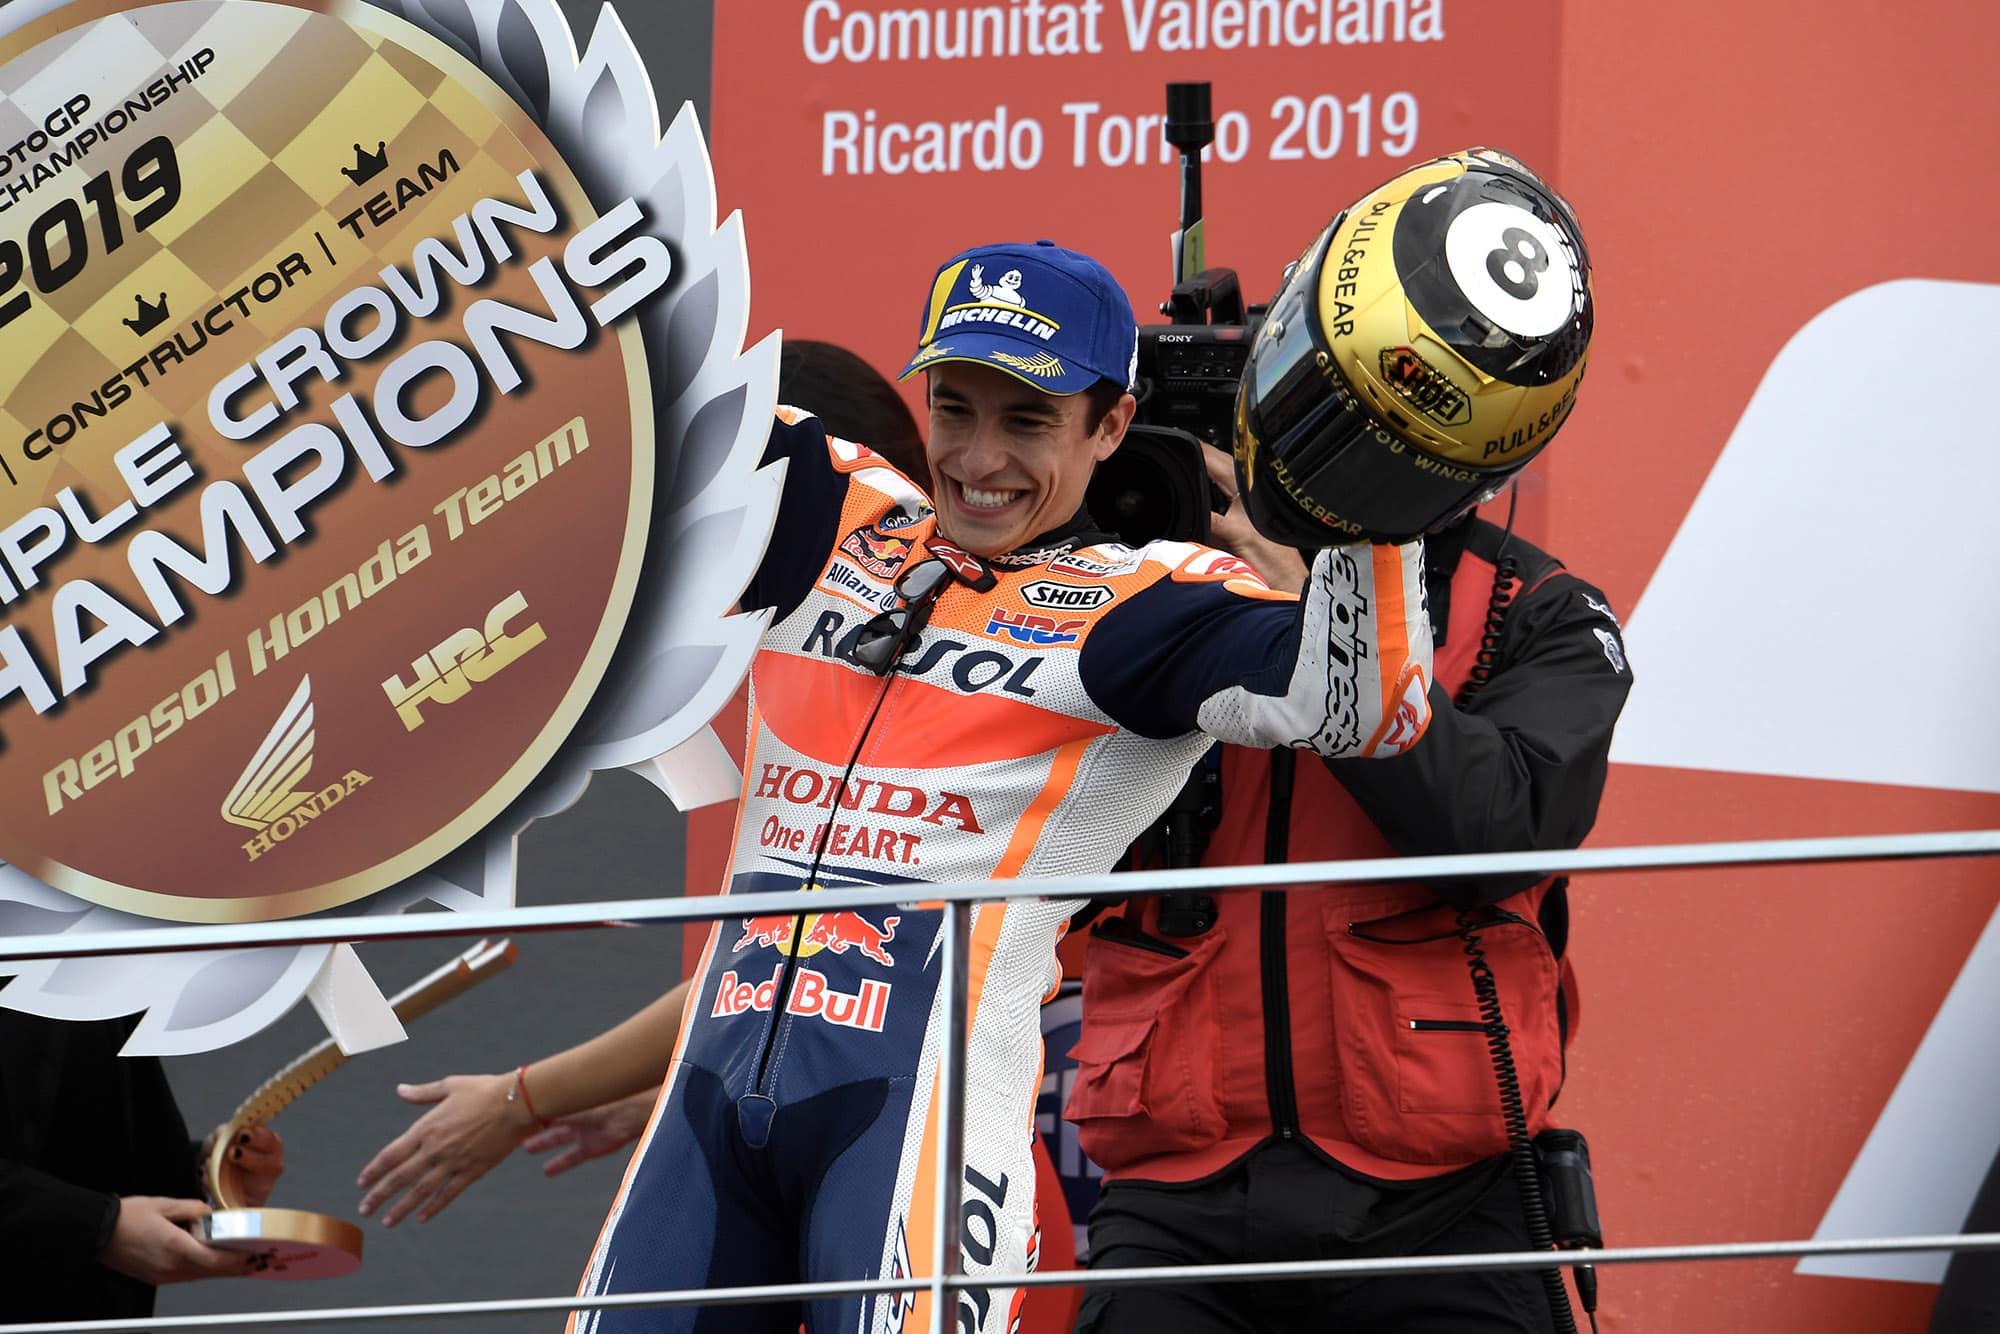 Marquez on the podium in the 2019 MotoGP Valencia Grand Prix